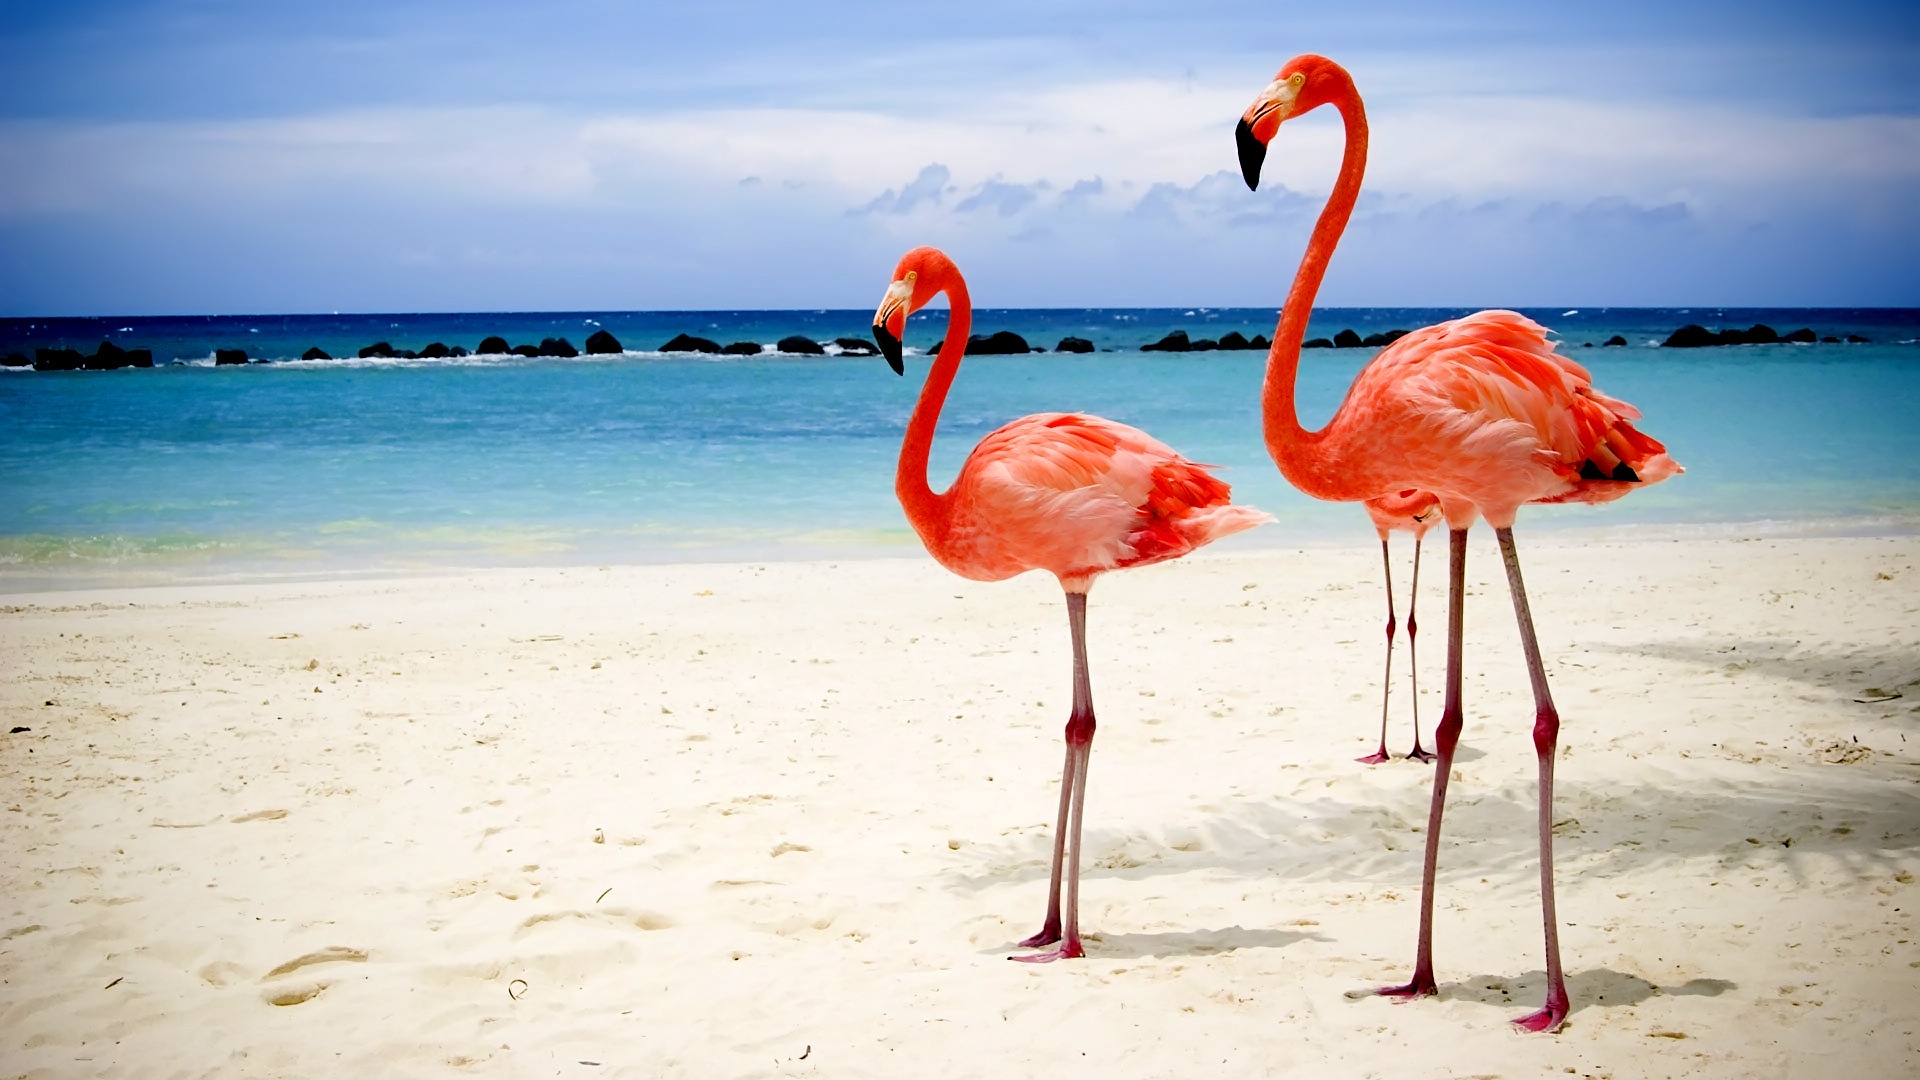 Flamingos on Beach for 1920 x 1080 HDTV 1080p resolution